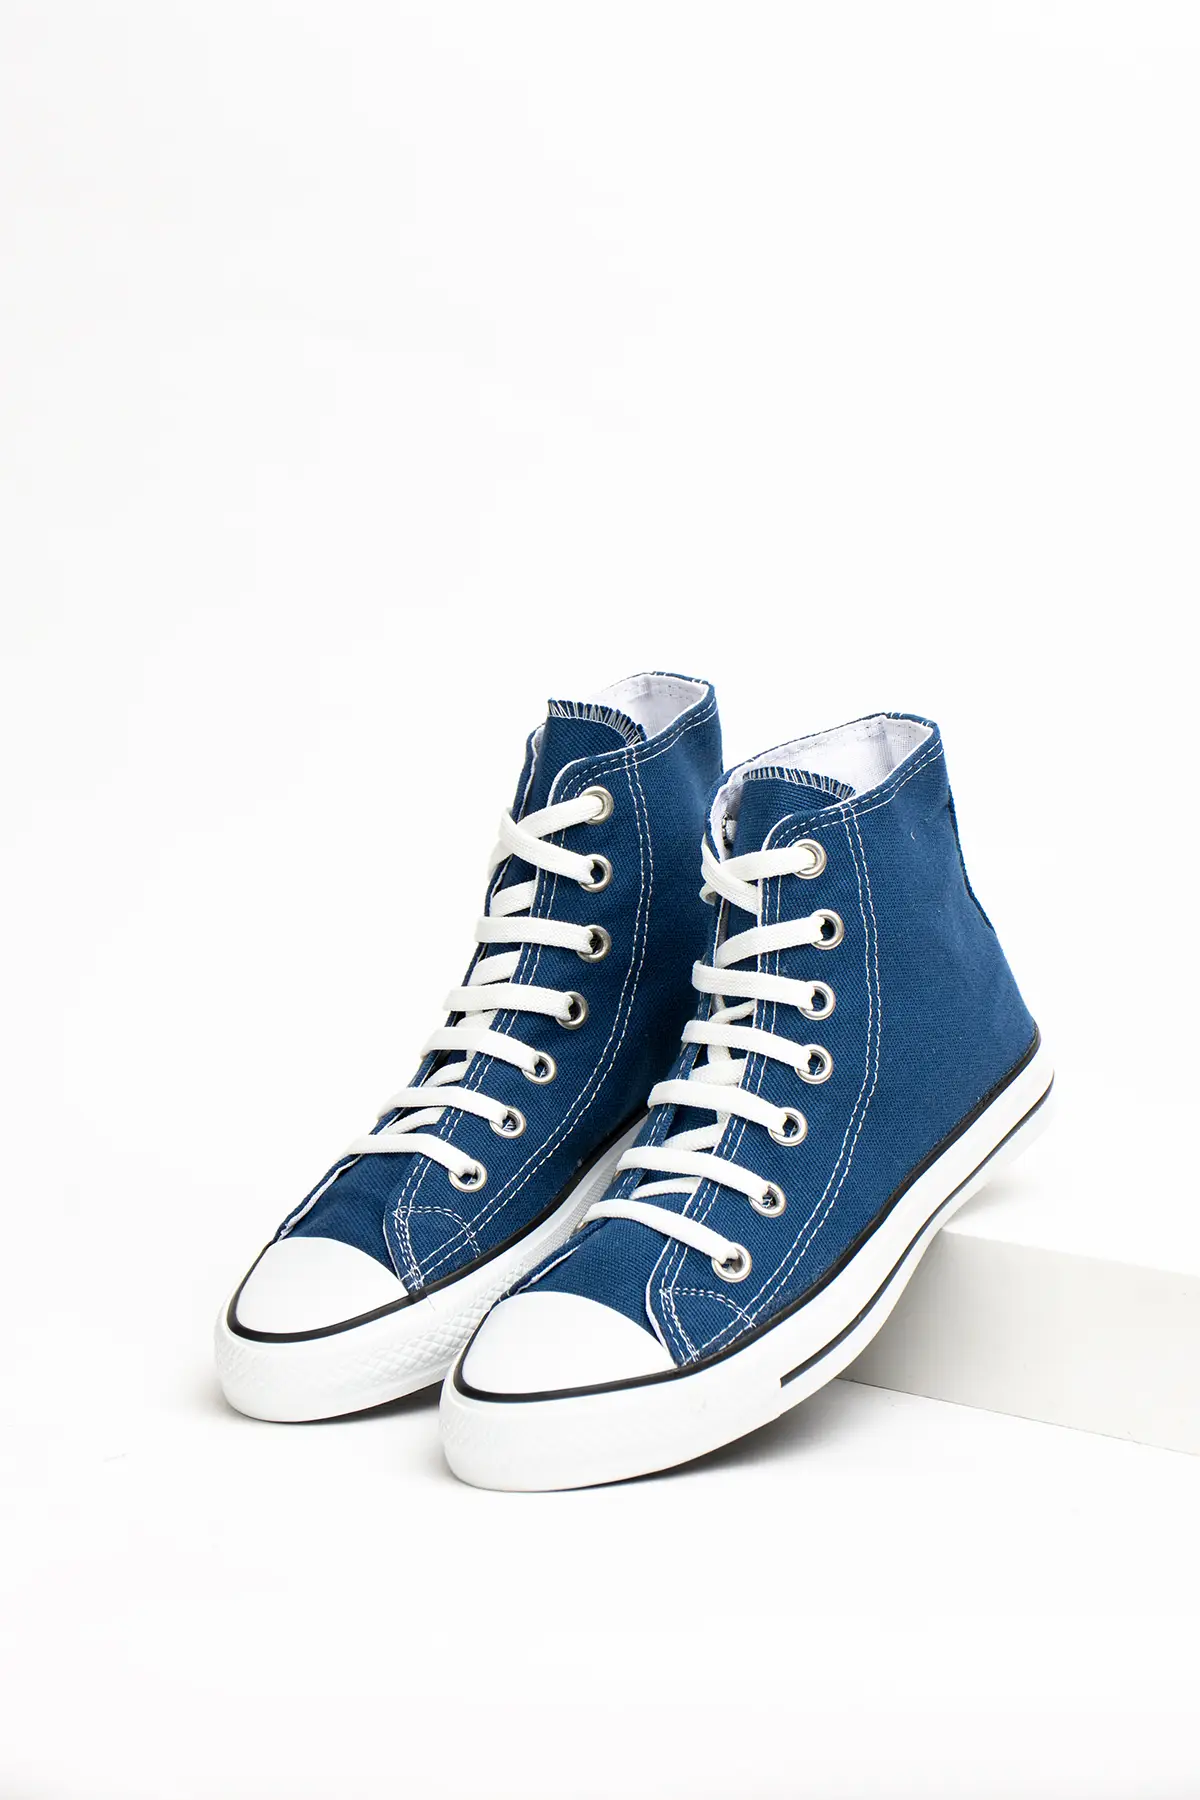 Pembe Potin Bağcıklı Rahat Taban Erkek Sneaker 10-3030-22MKeten - Mavi